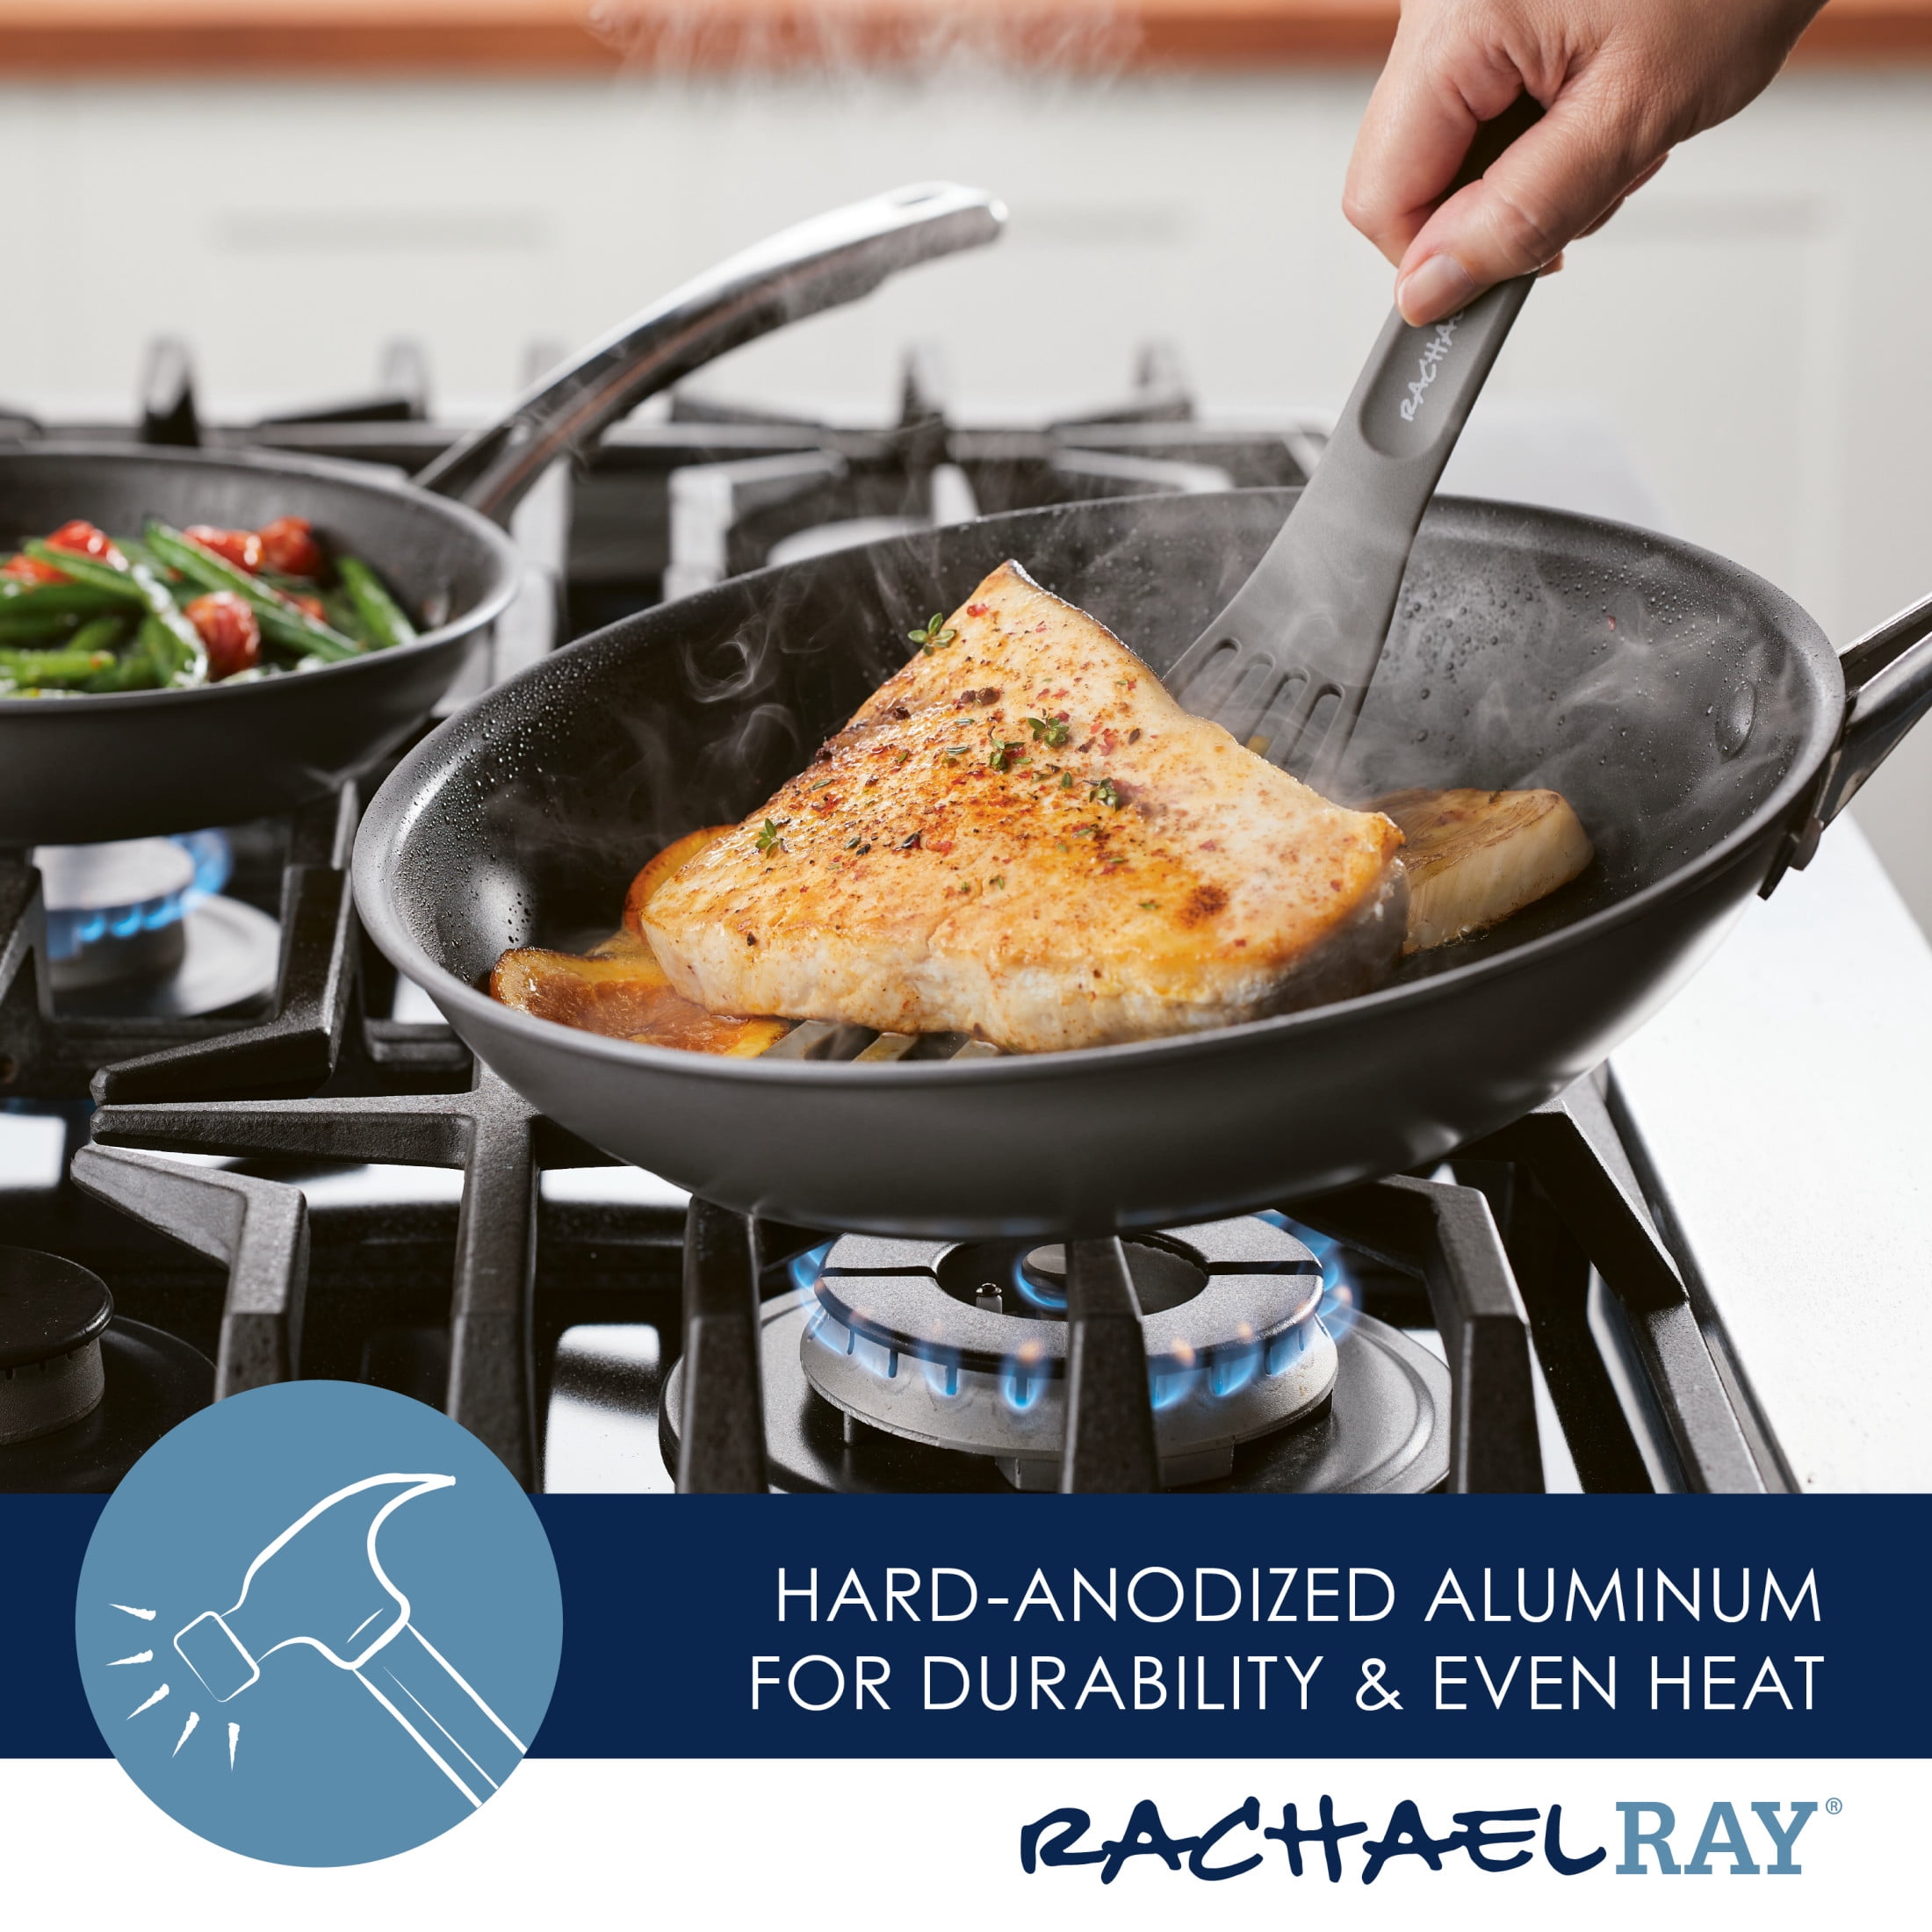 2-Piece Hard Anodized Nonstick Frying Pan Set – Rachael Ray